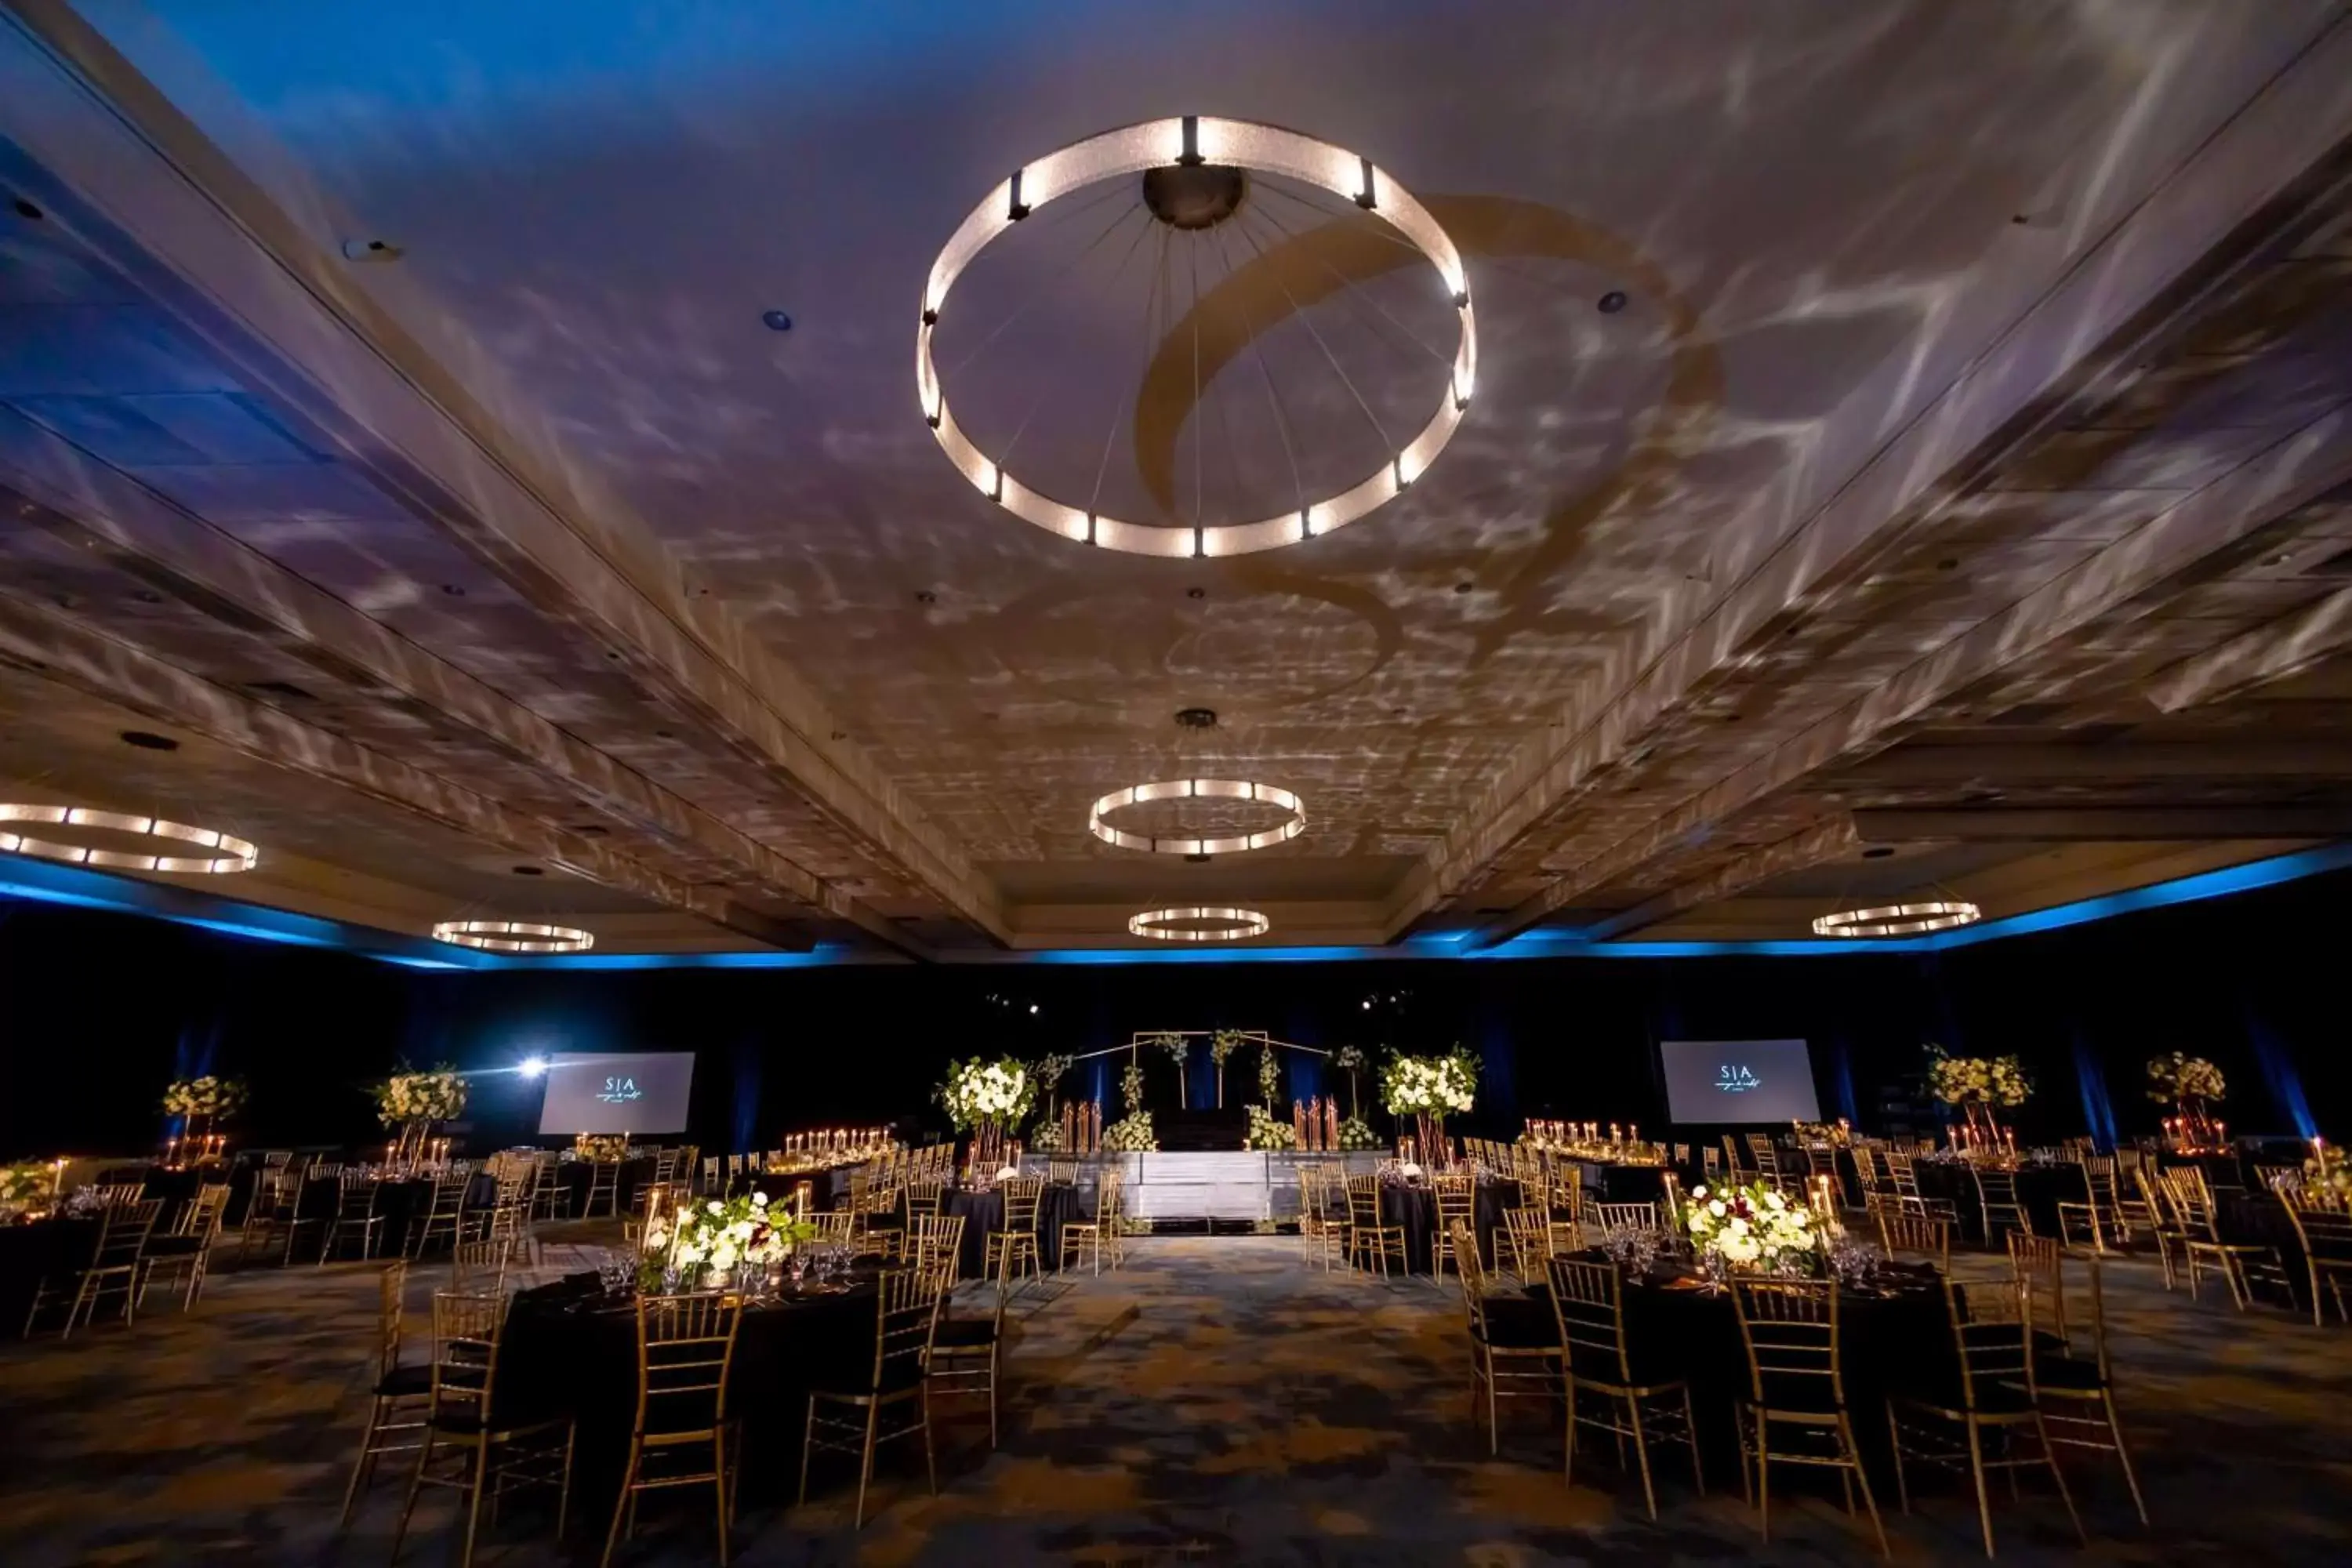 Meeting/conference room, Banquet Facilities in Hilton Santa Barbara Beachfront Resort